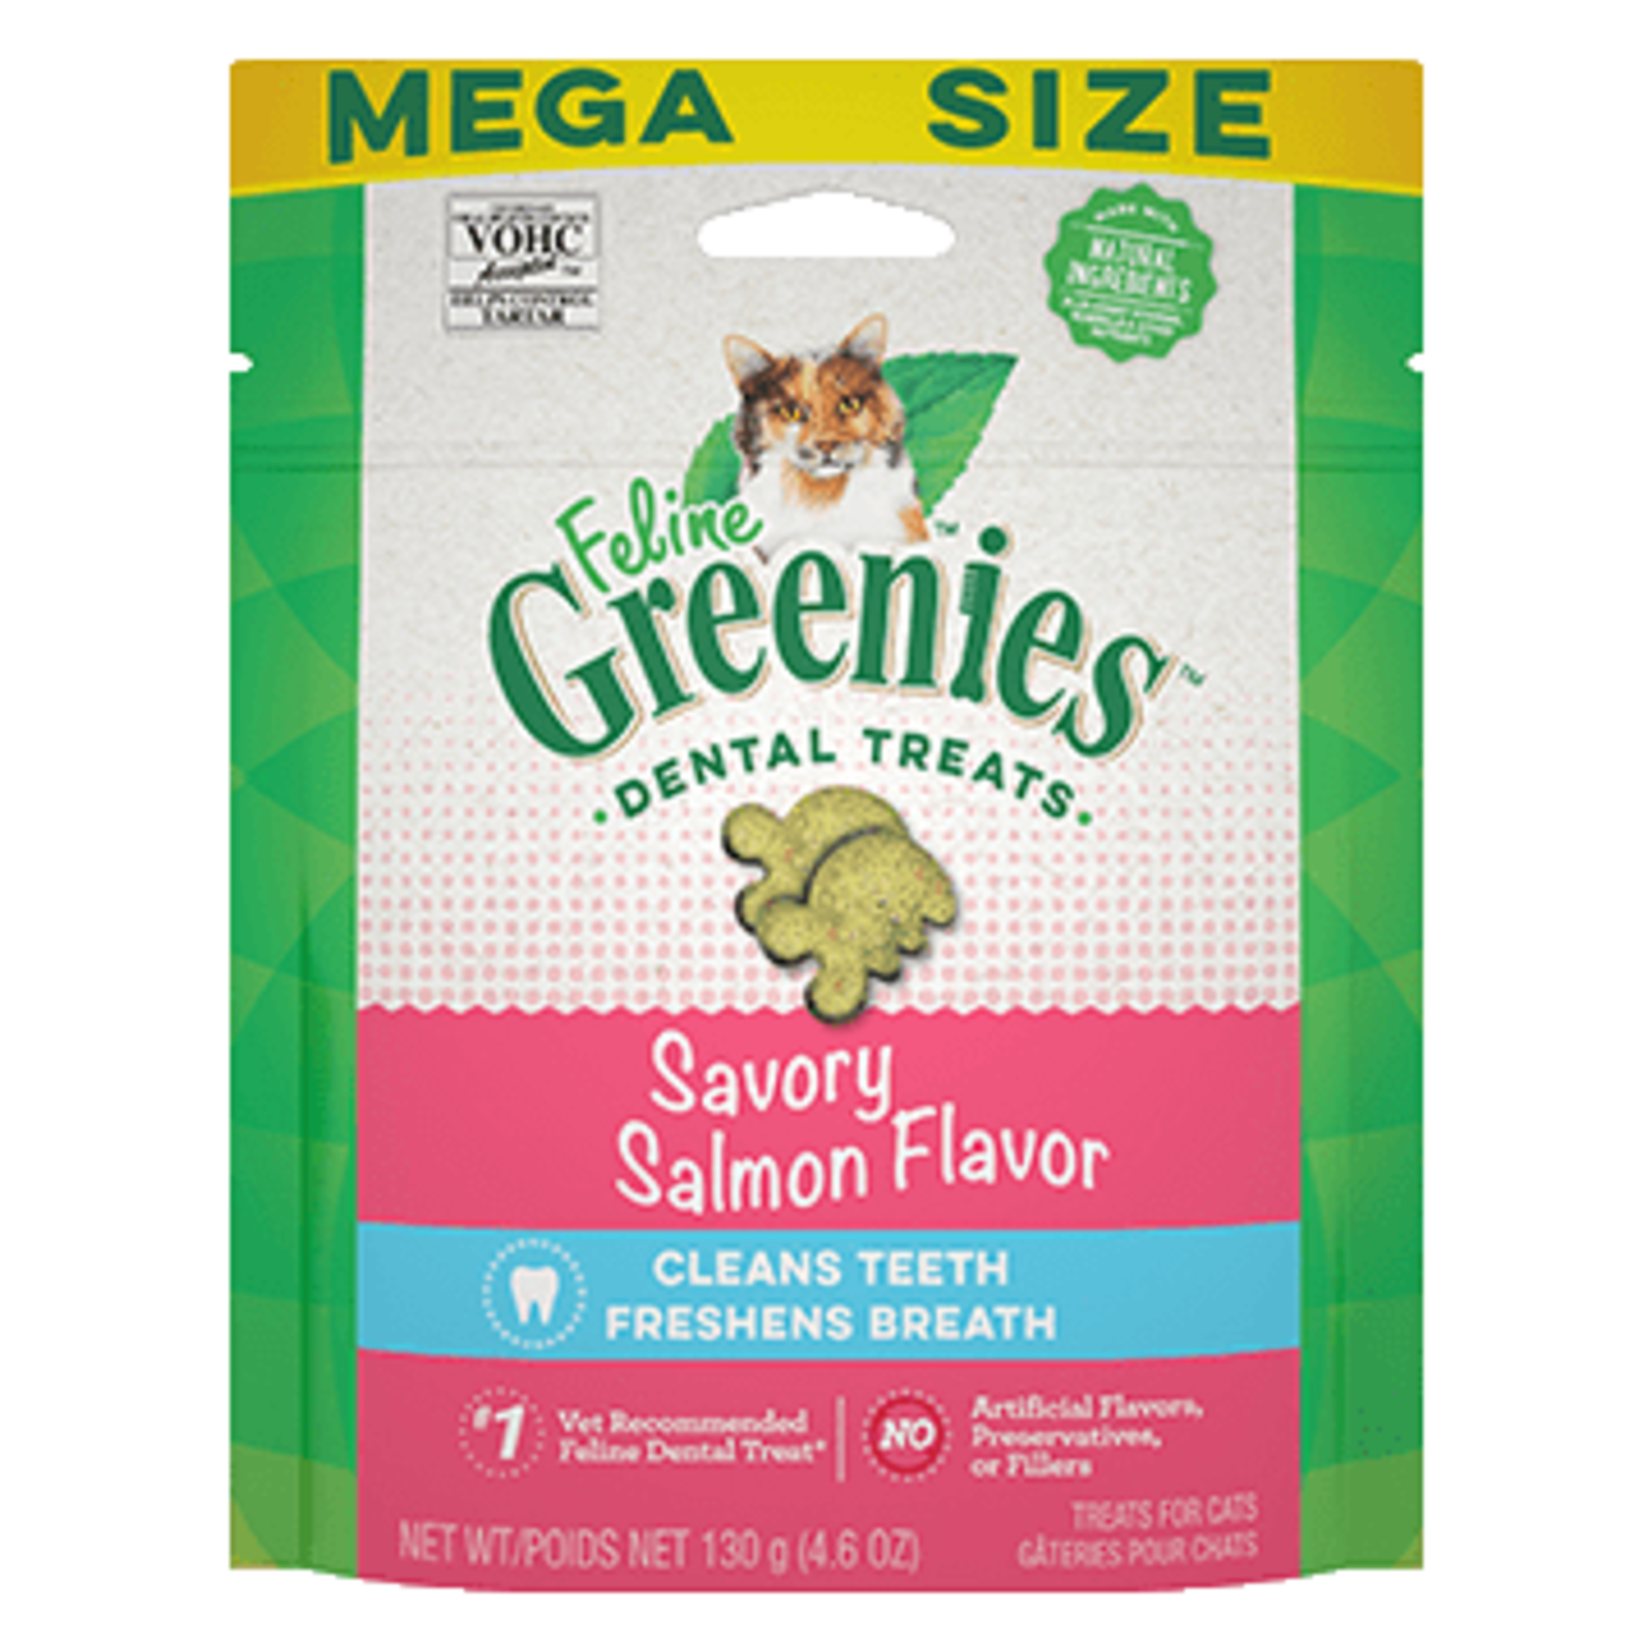 Greenies Feline Greenies Cat Dental Treats Savory Salmon Flavor